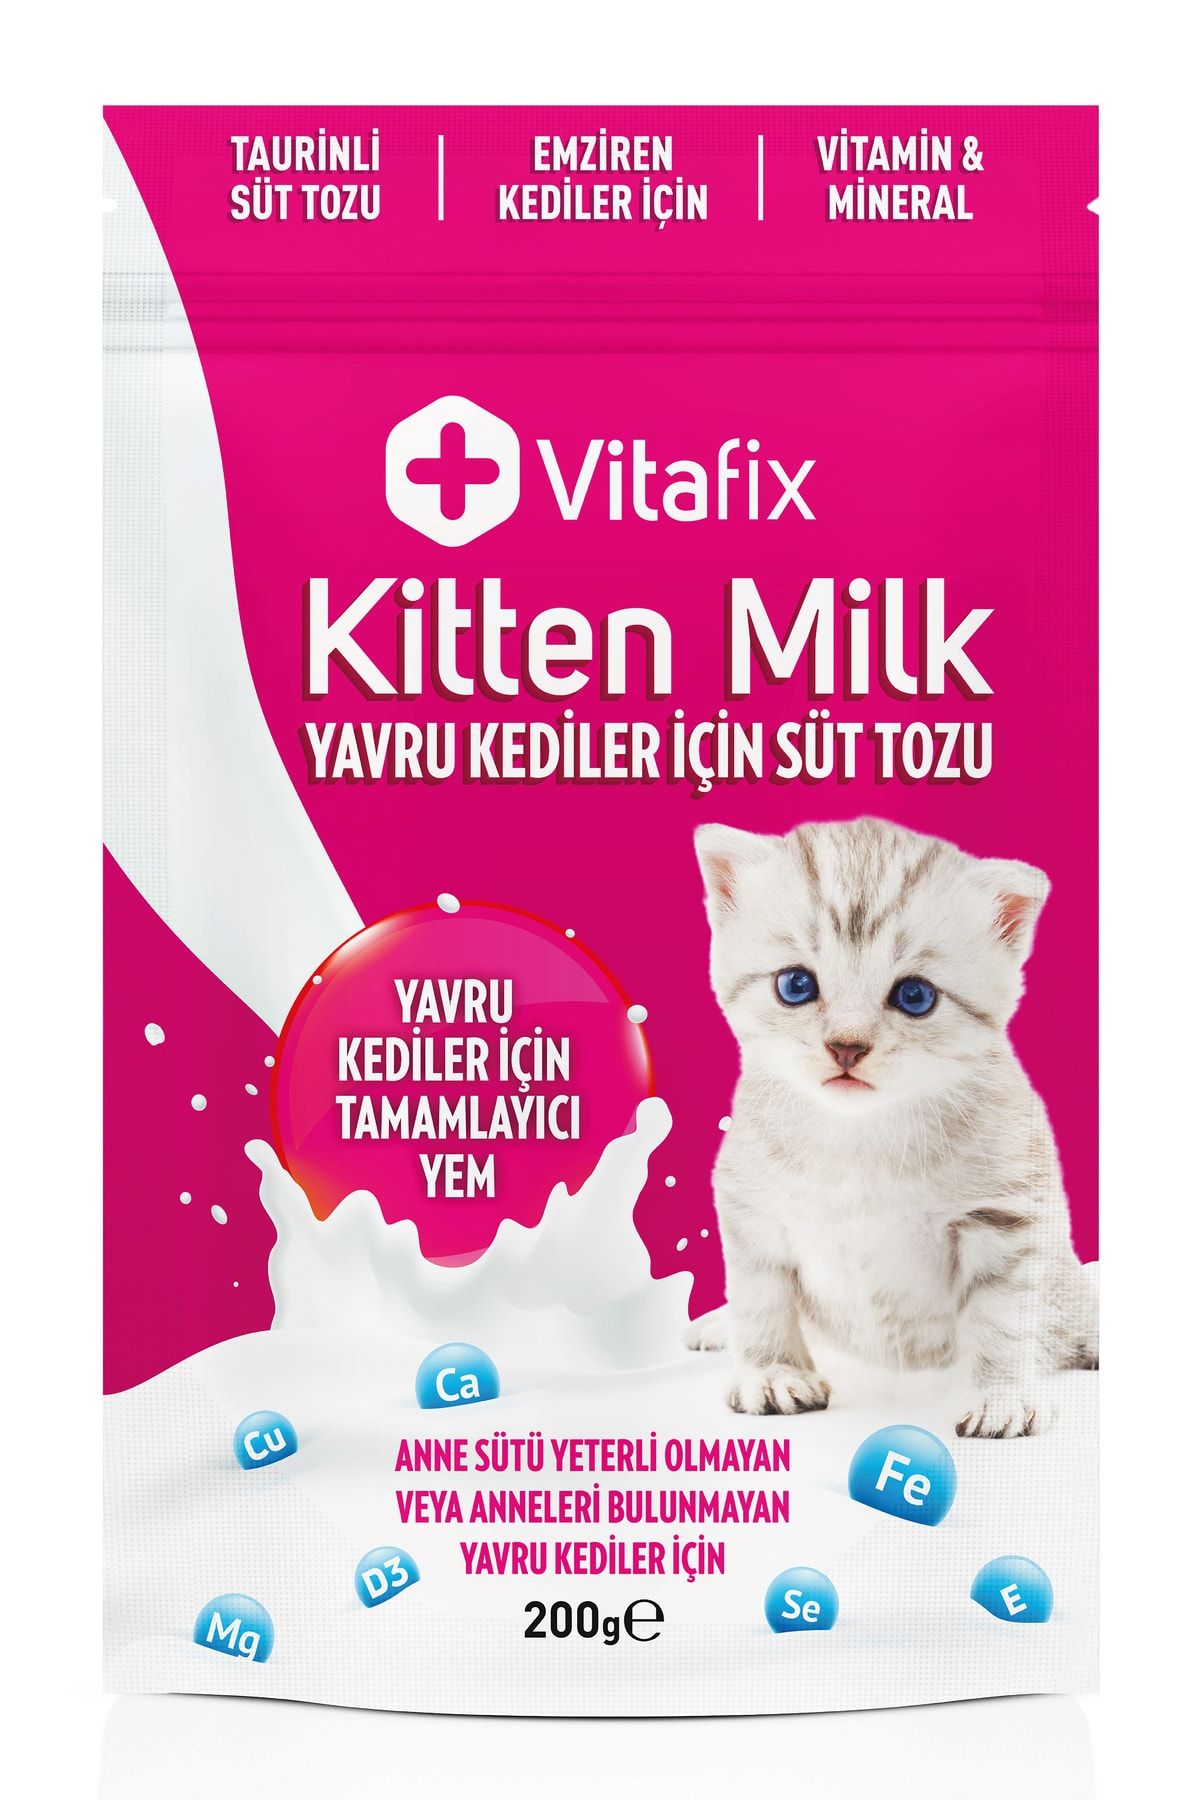 Vitafix Taurinli Kedi Süt Tozu - Yavru Kedi Süt Tozu - Emziren Anne Kediler Için Süt Tozu - 200gr Süt Tozu